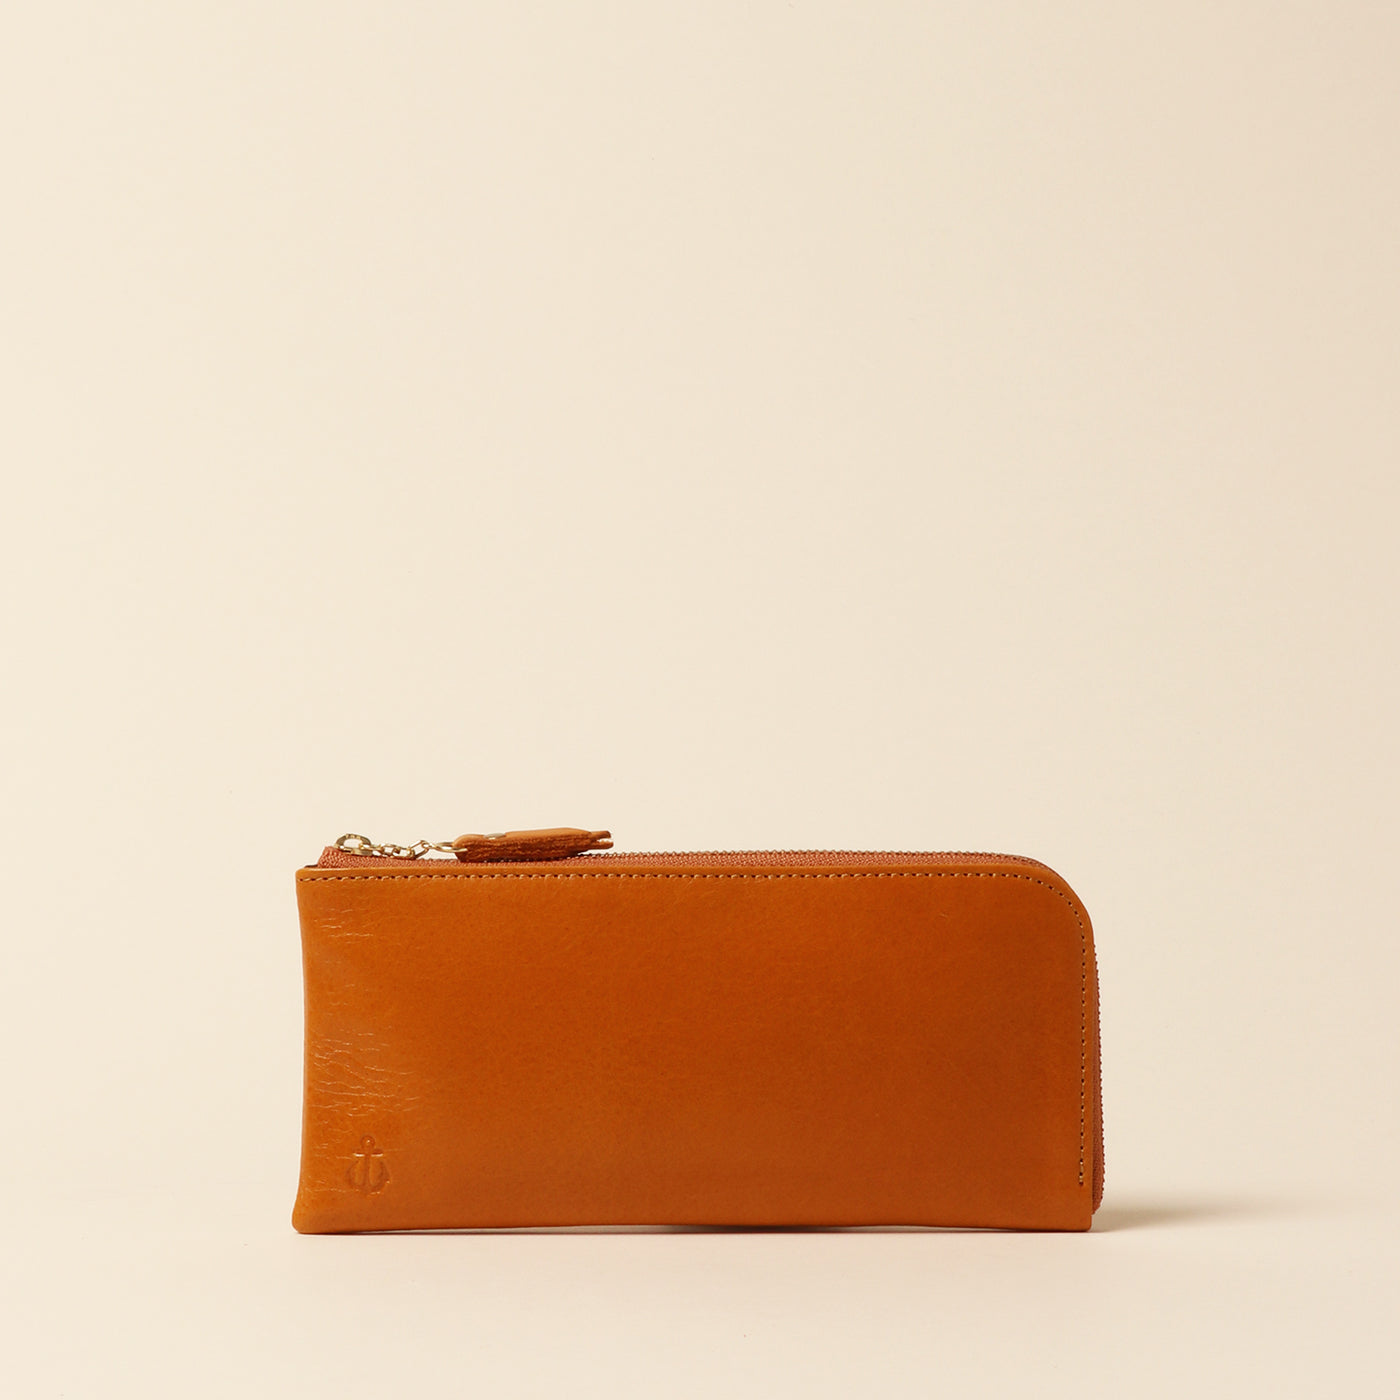 <Kiichi> Long wallet (L-shaped zipper) / Blue